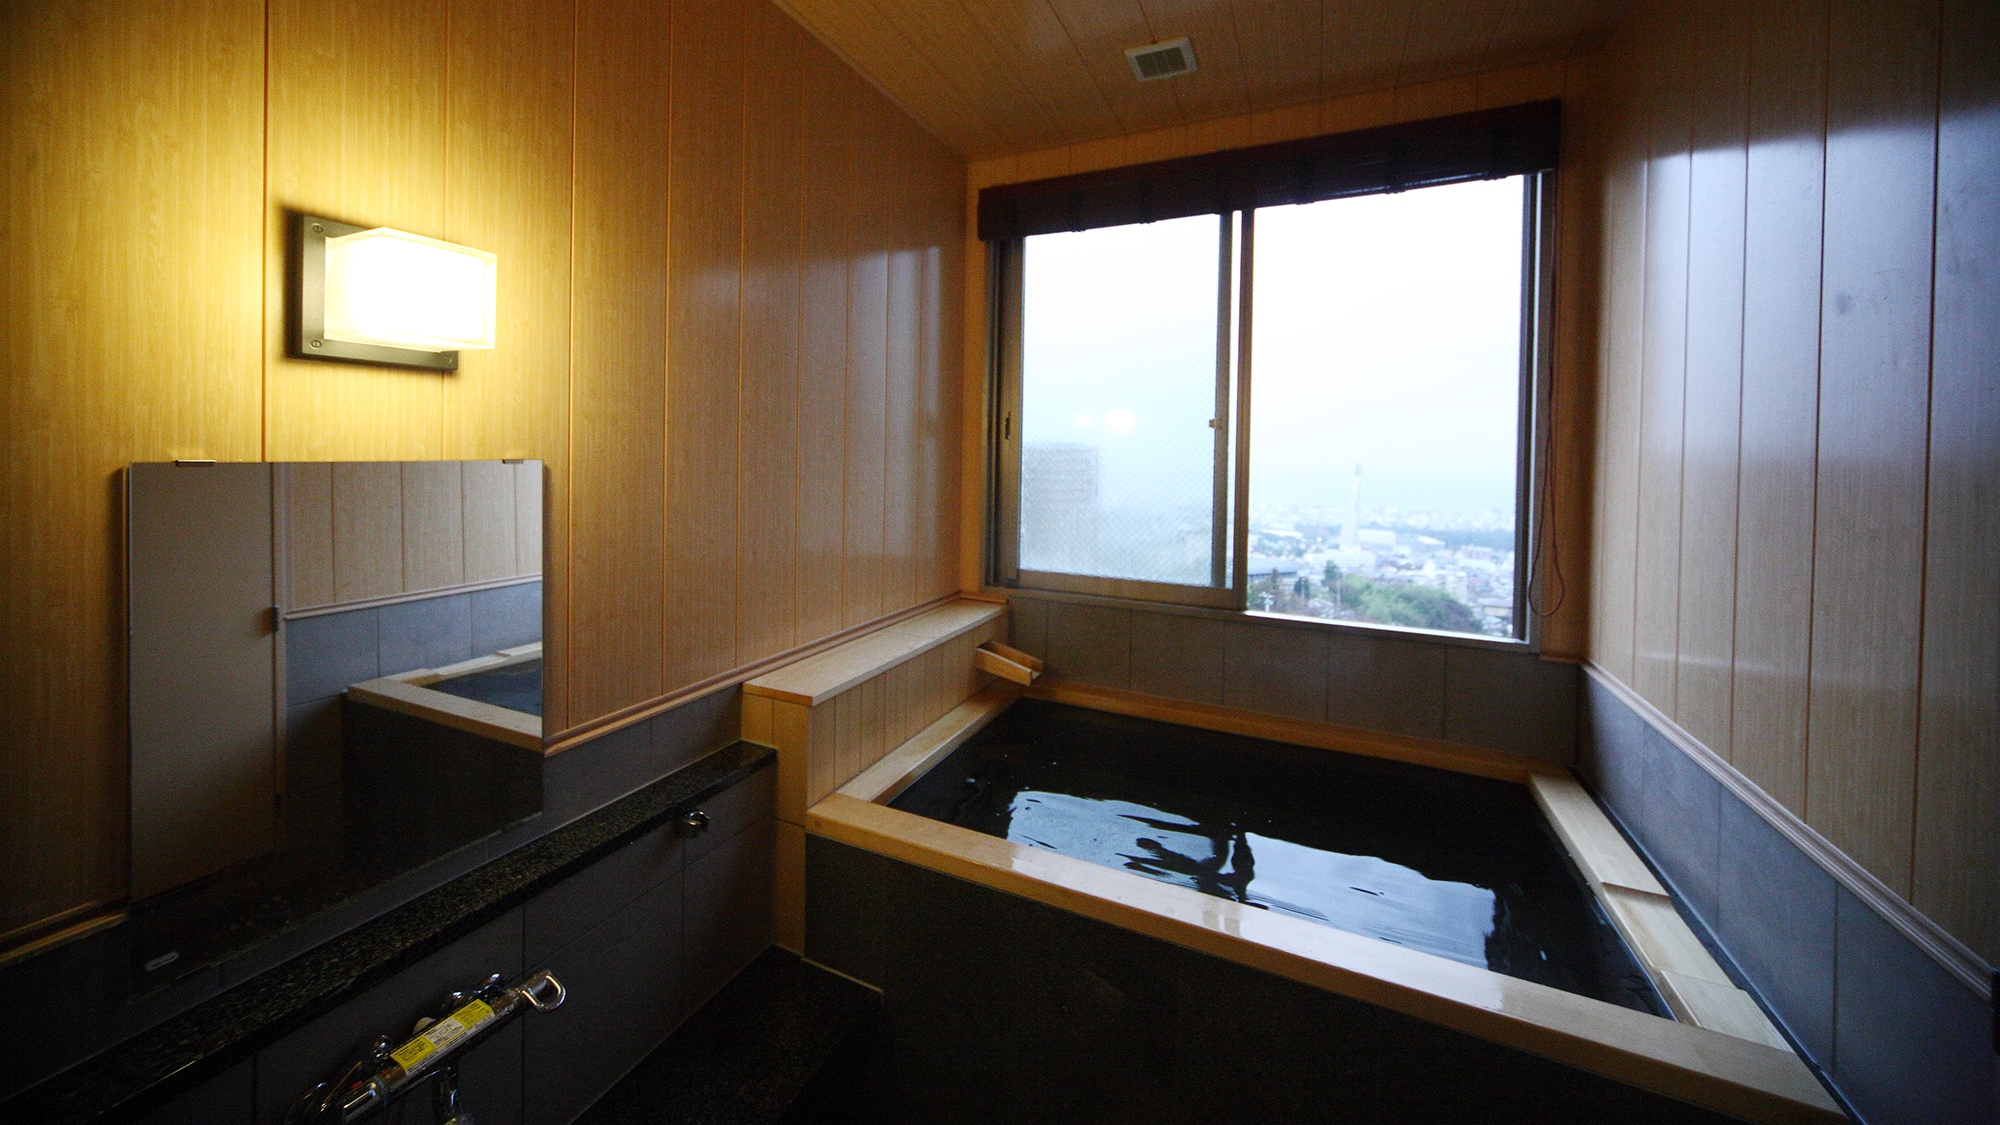 ◆ Tsukinoso ◆ Special Japanese-style room "Matsukaze" ◆